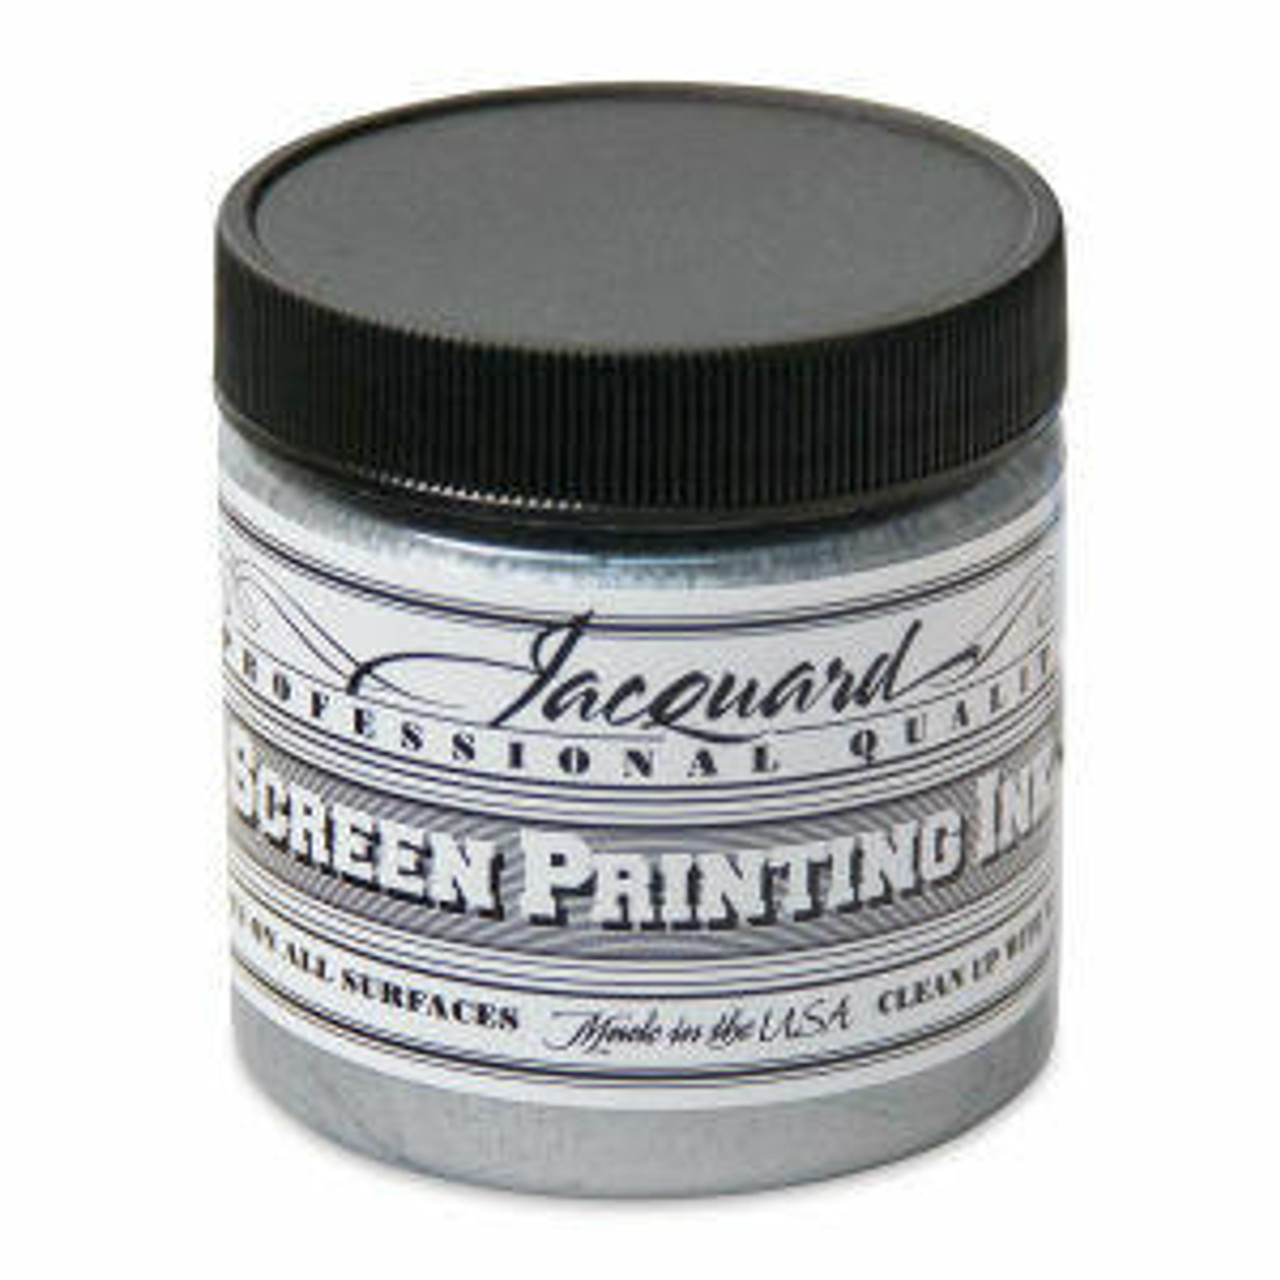 Pro-Tec Powder Paint 1 oz Jars Free Shipping 